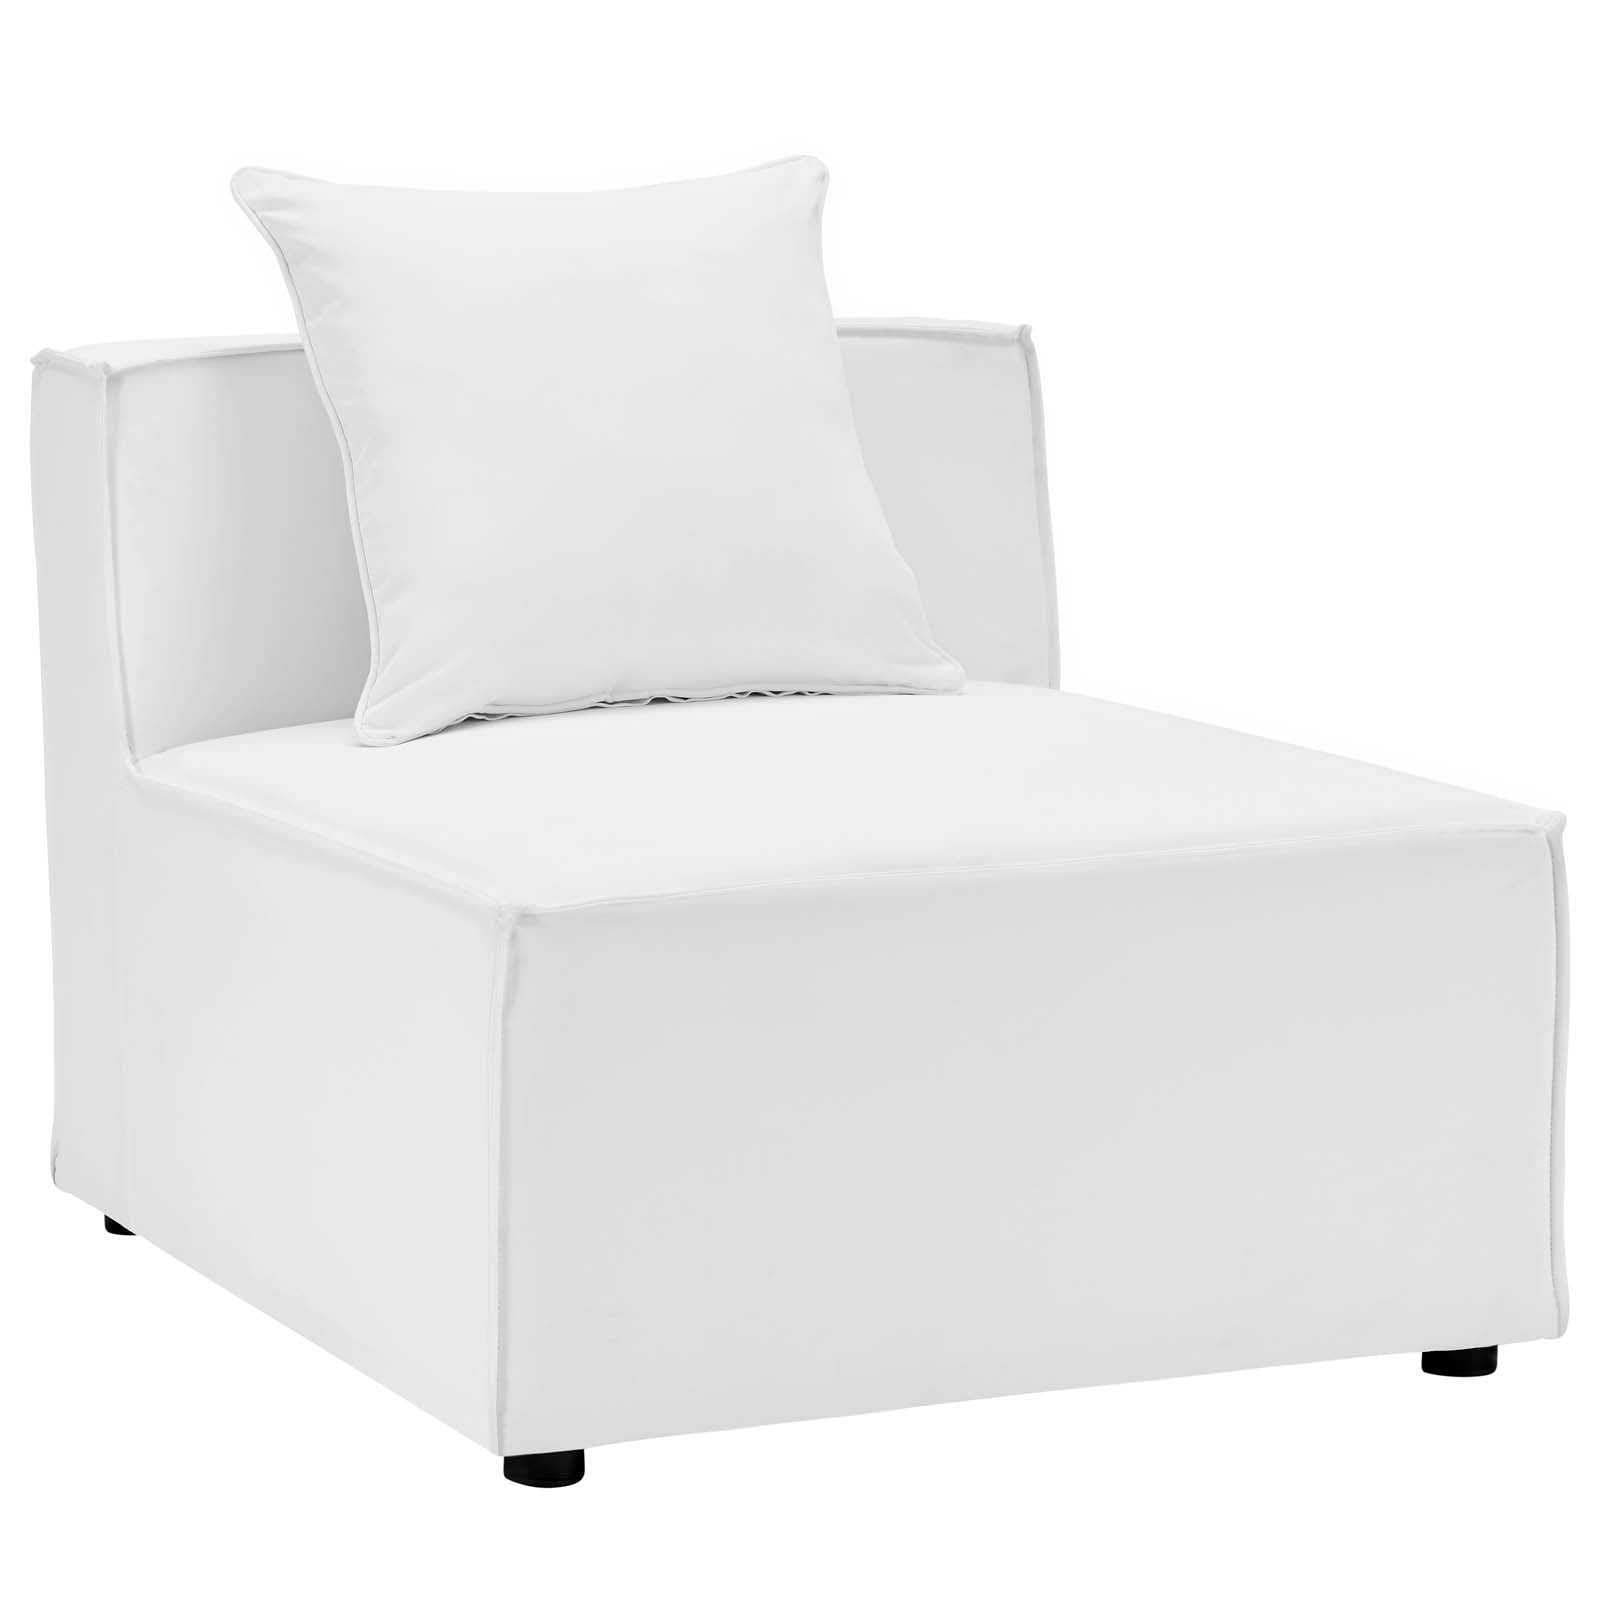 Modway Outdoor Sofas - Saybrook Outdoor Patio 7-Piece Sectional Sofa White